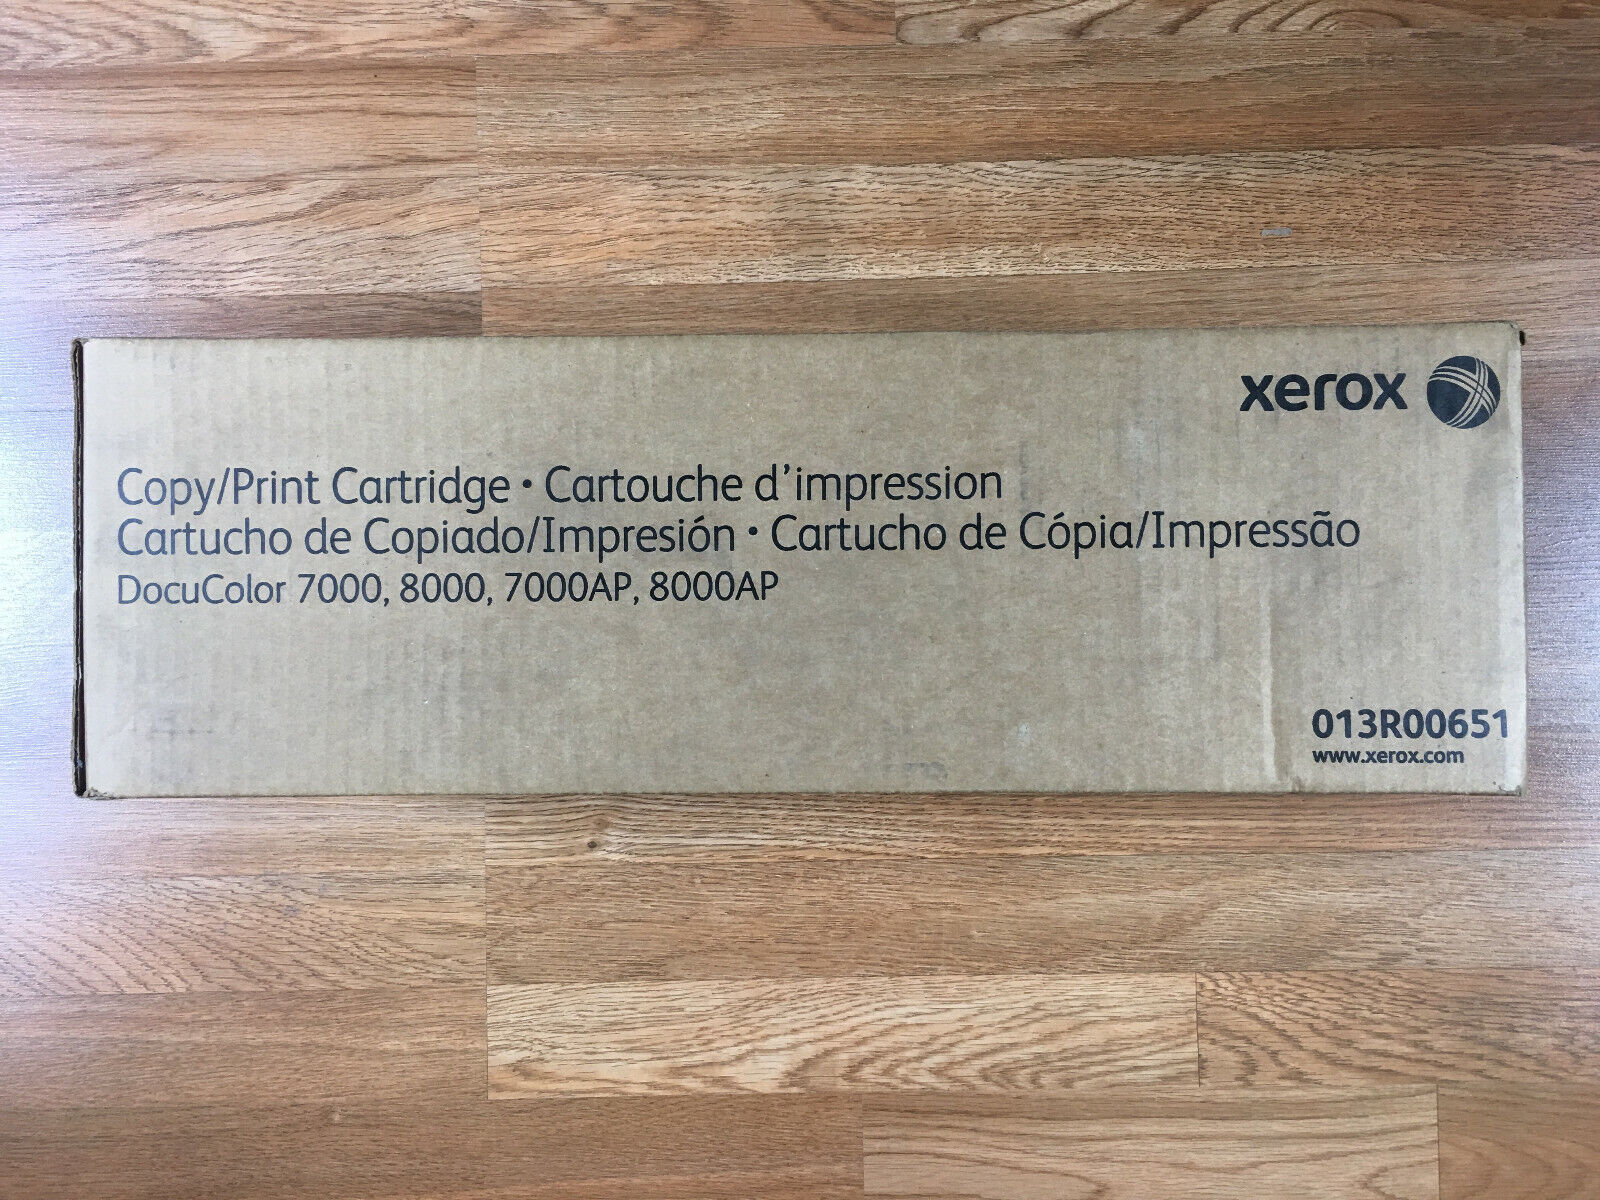 Xerox Copy Print Cartridge DocuColor 7000 8000 7000AP 8000AP Same Day Shipping!! - copier-clearance-center